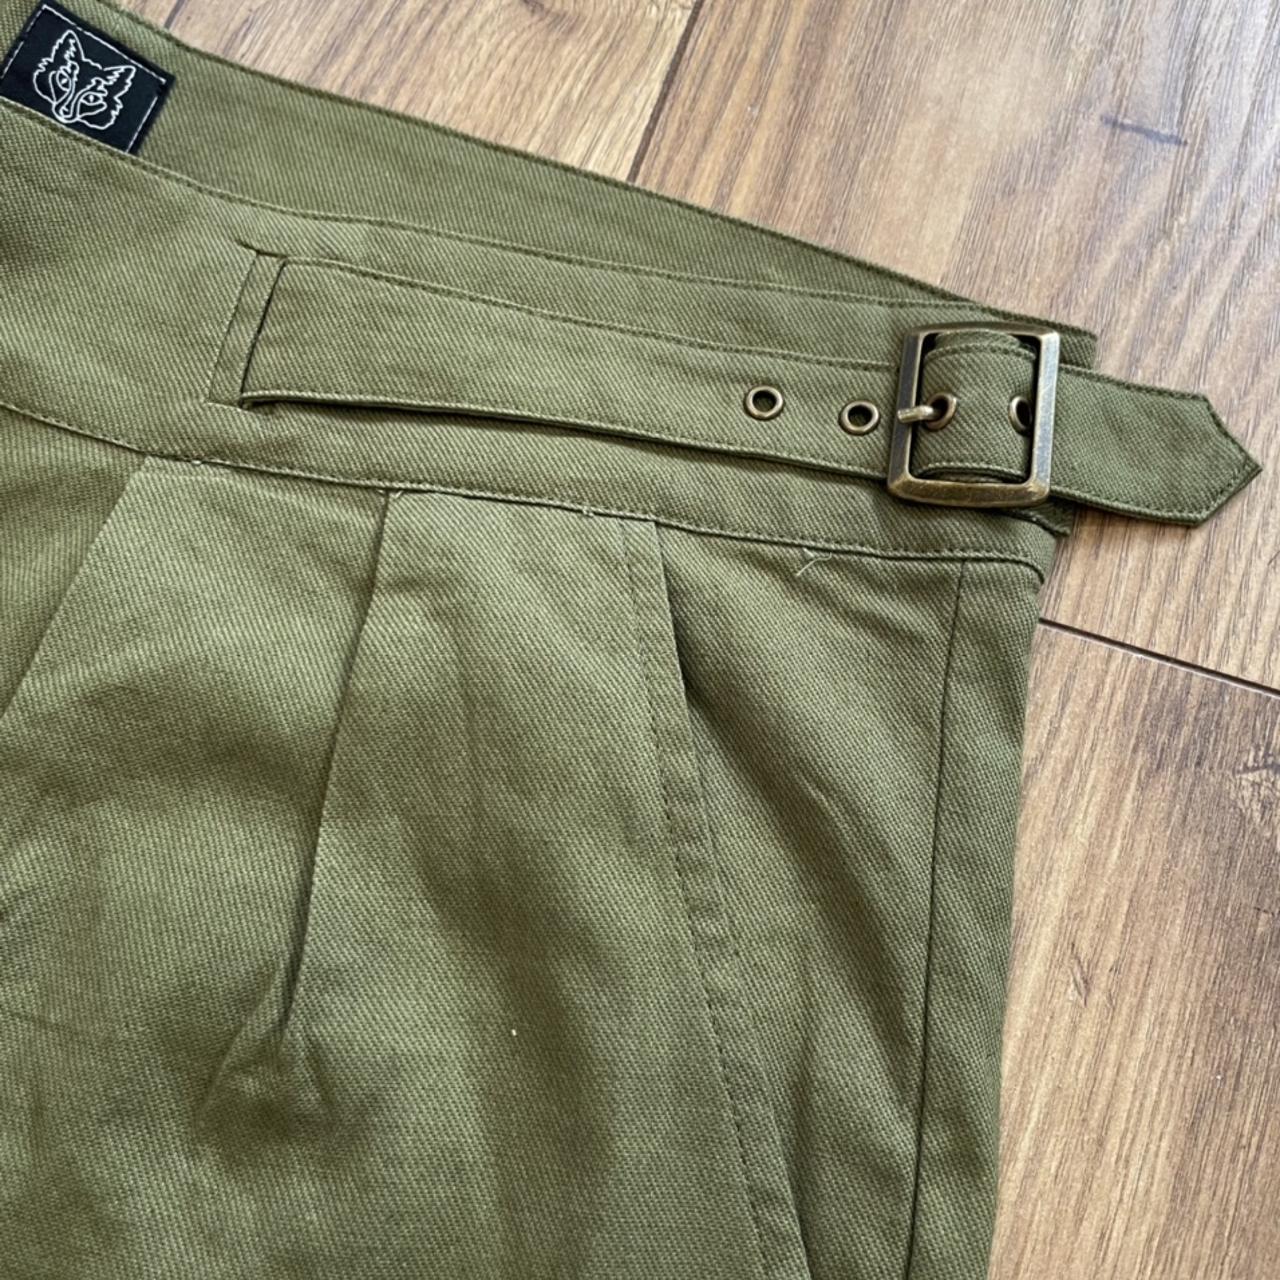 Gurkha Army Pants - Miltary Trousers British Utility... - Depop